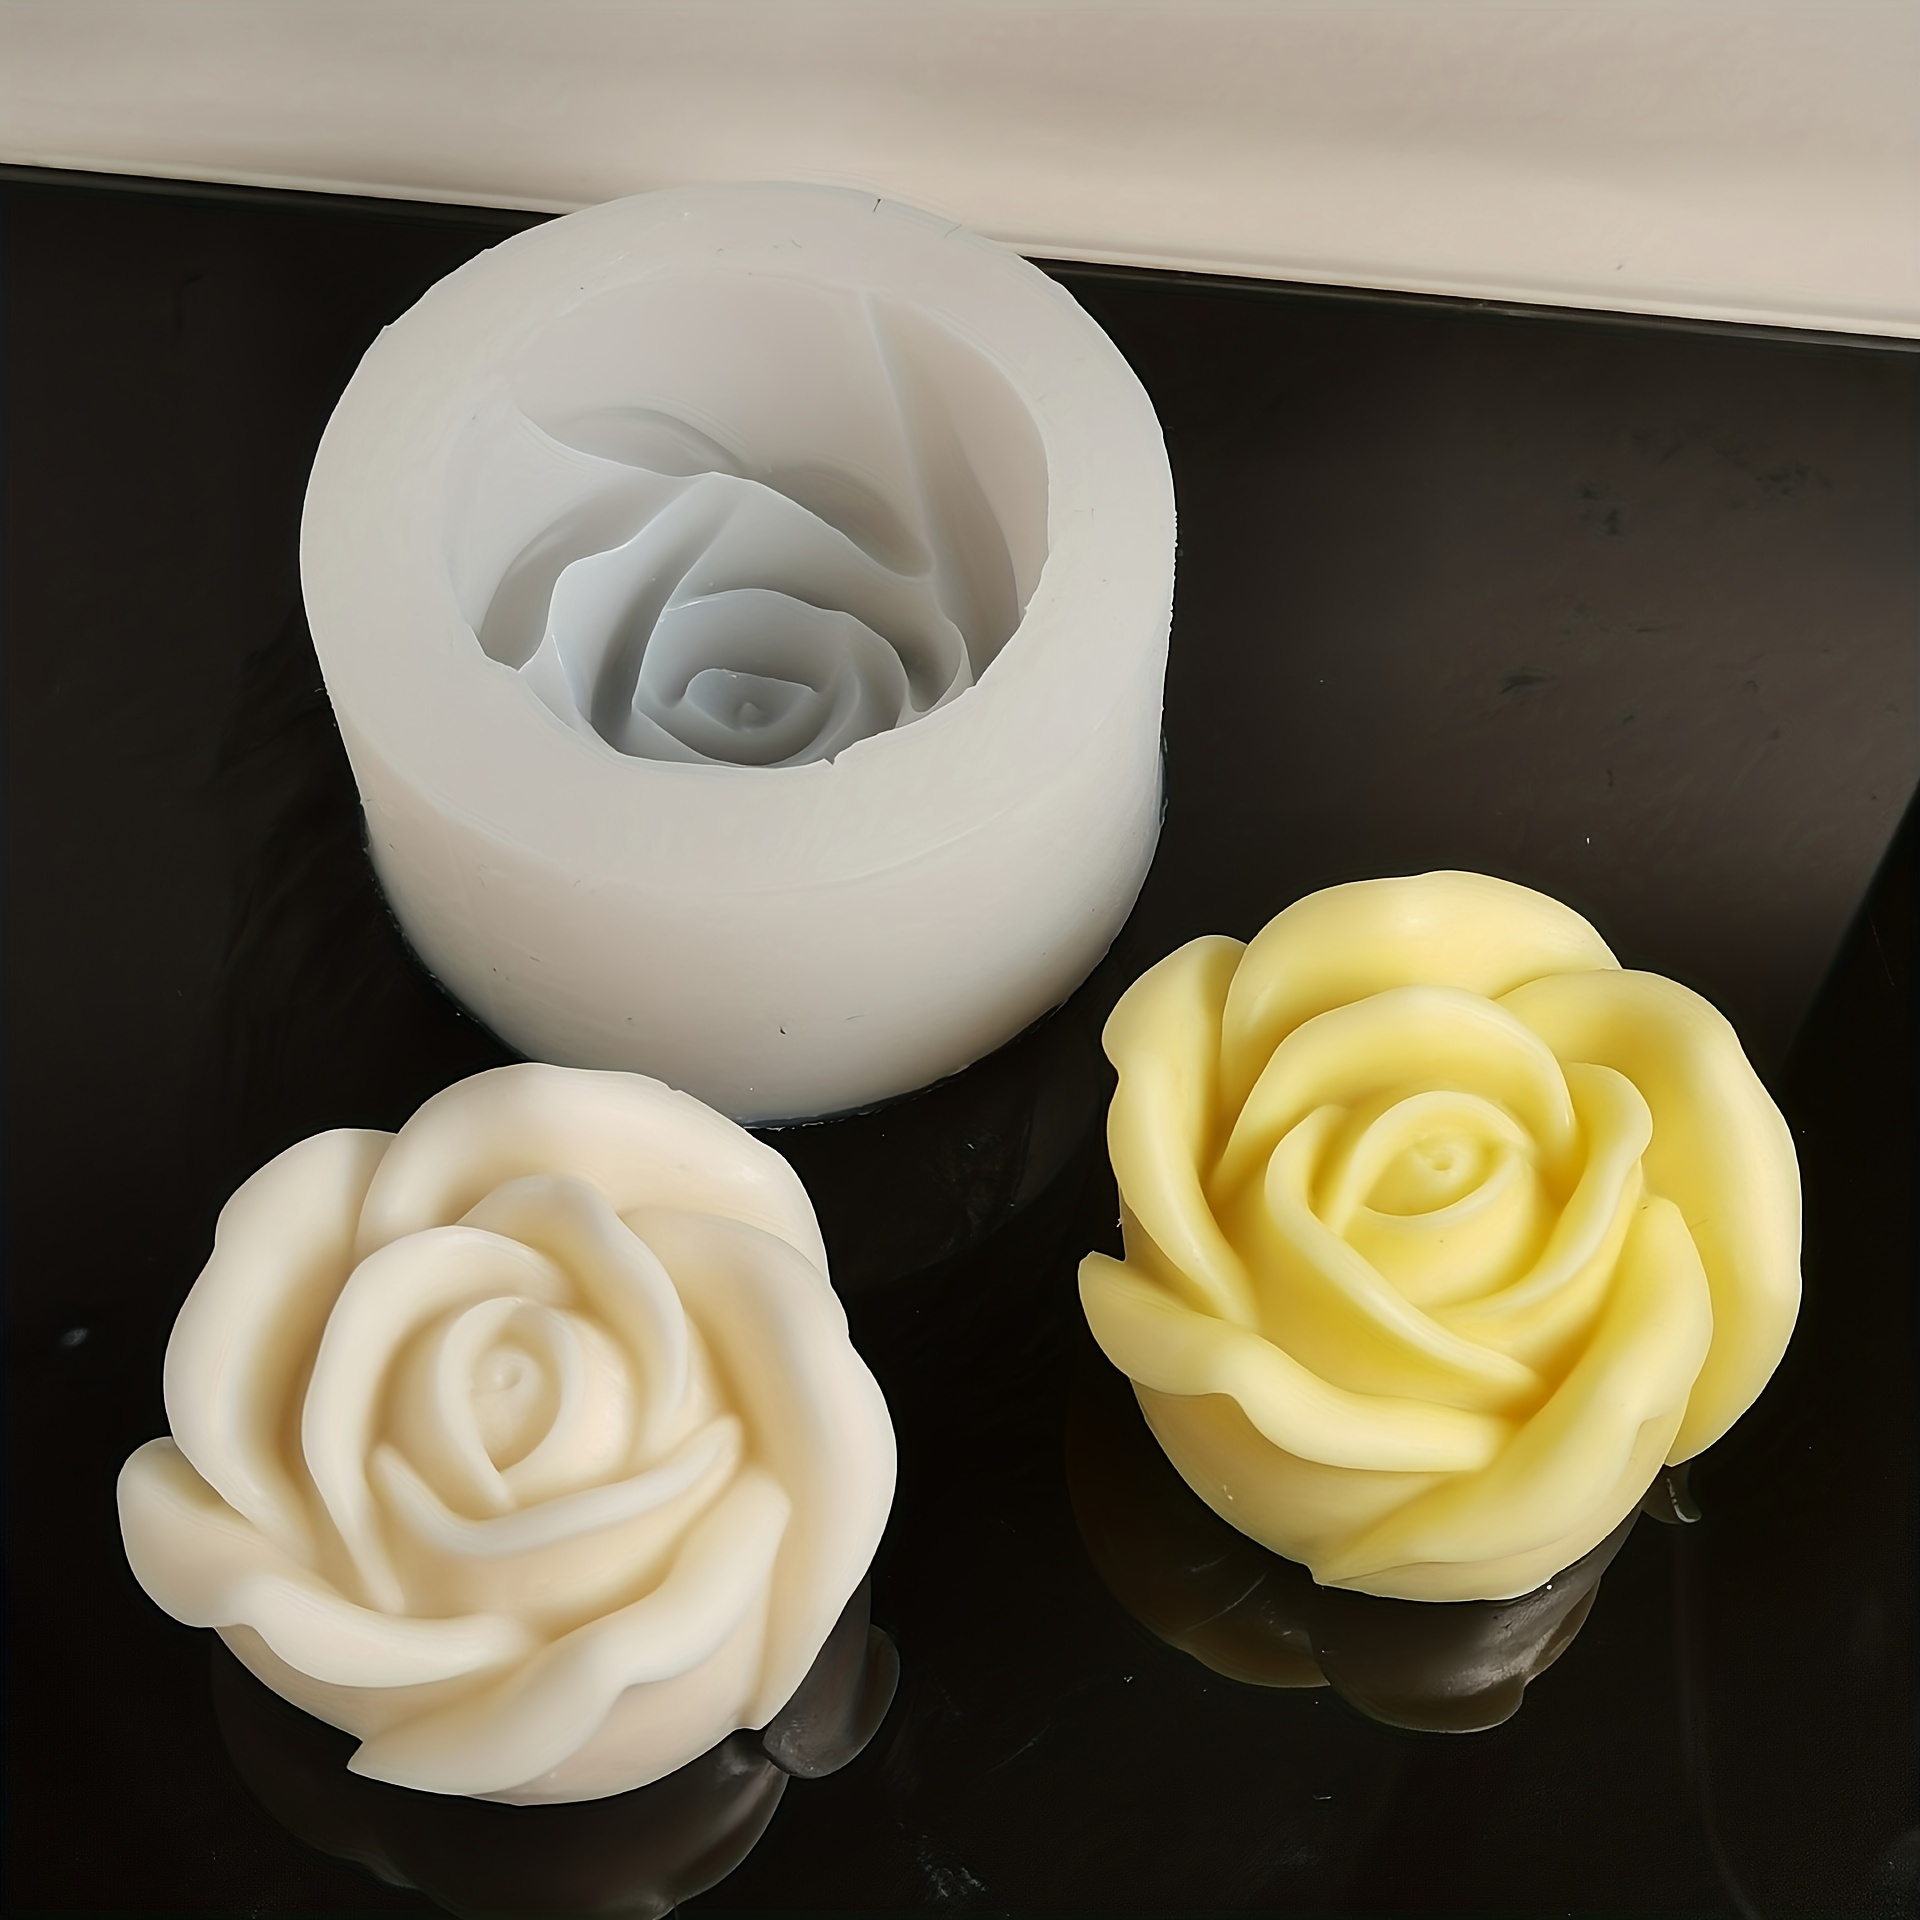 

Rose-shaped Silicone Mold For Candles, Aromatherapy Gypsum, Car Decor, Cake Baking & Handmade Soaps - Oval Fantasy Design